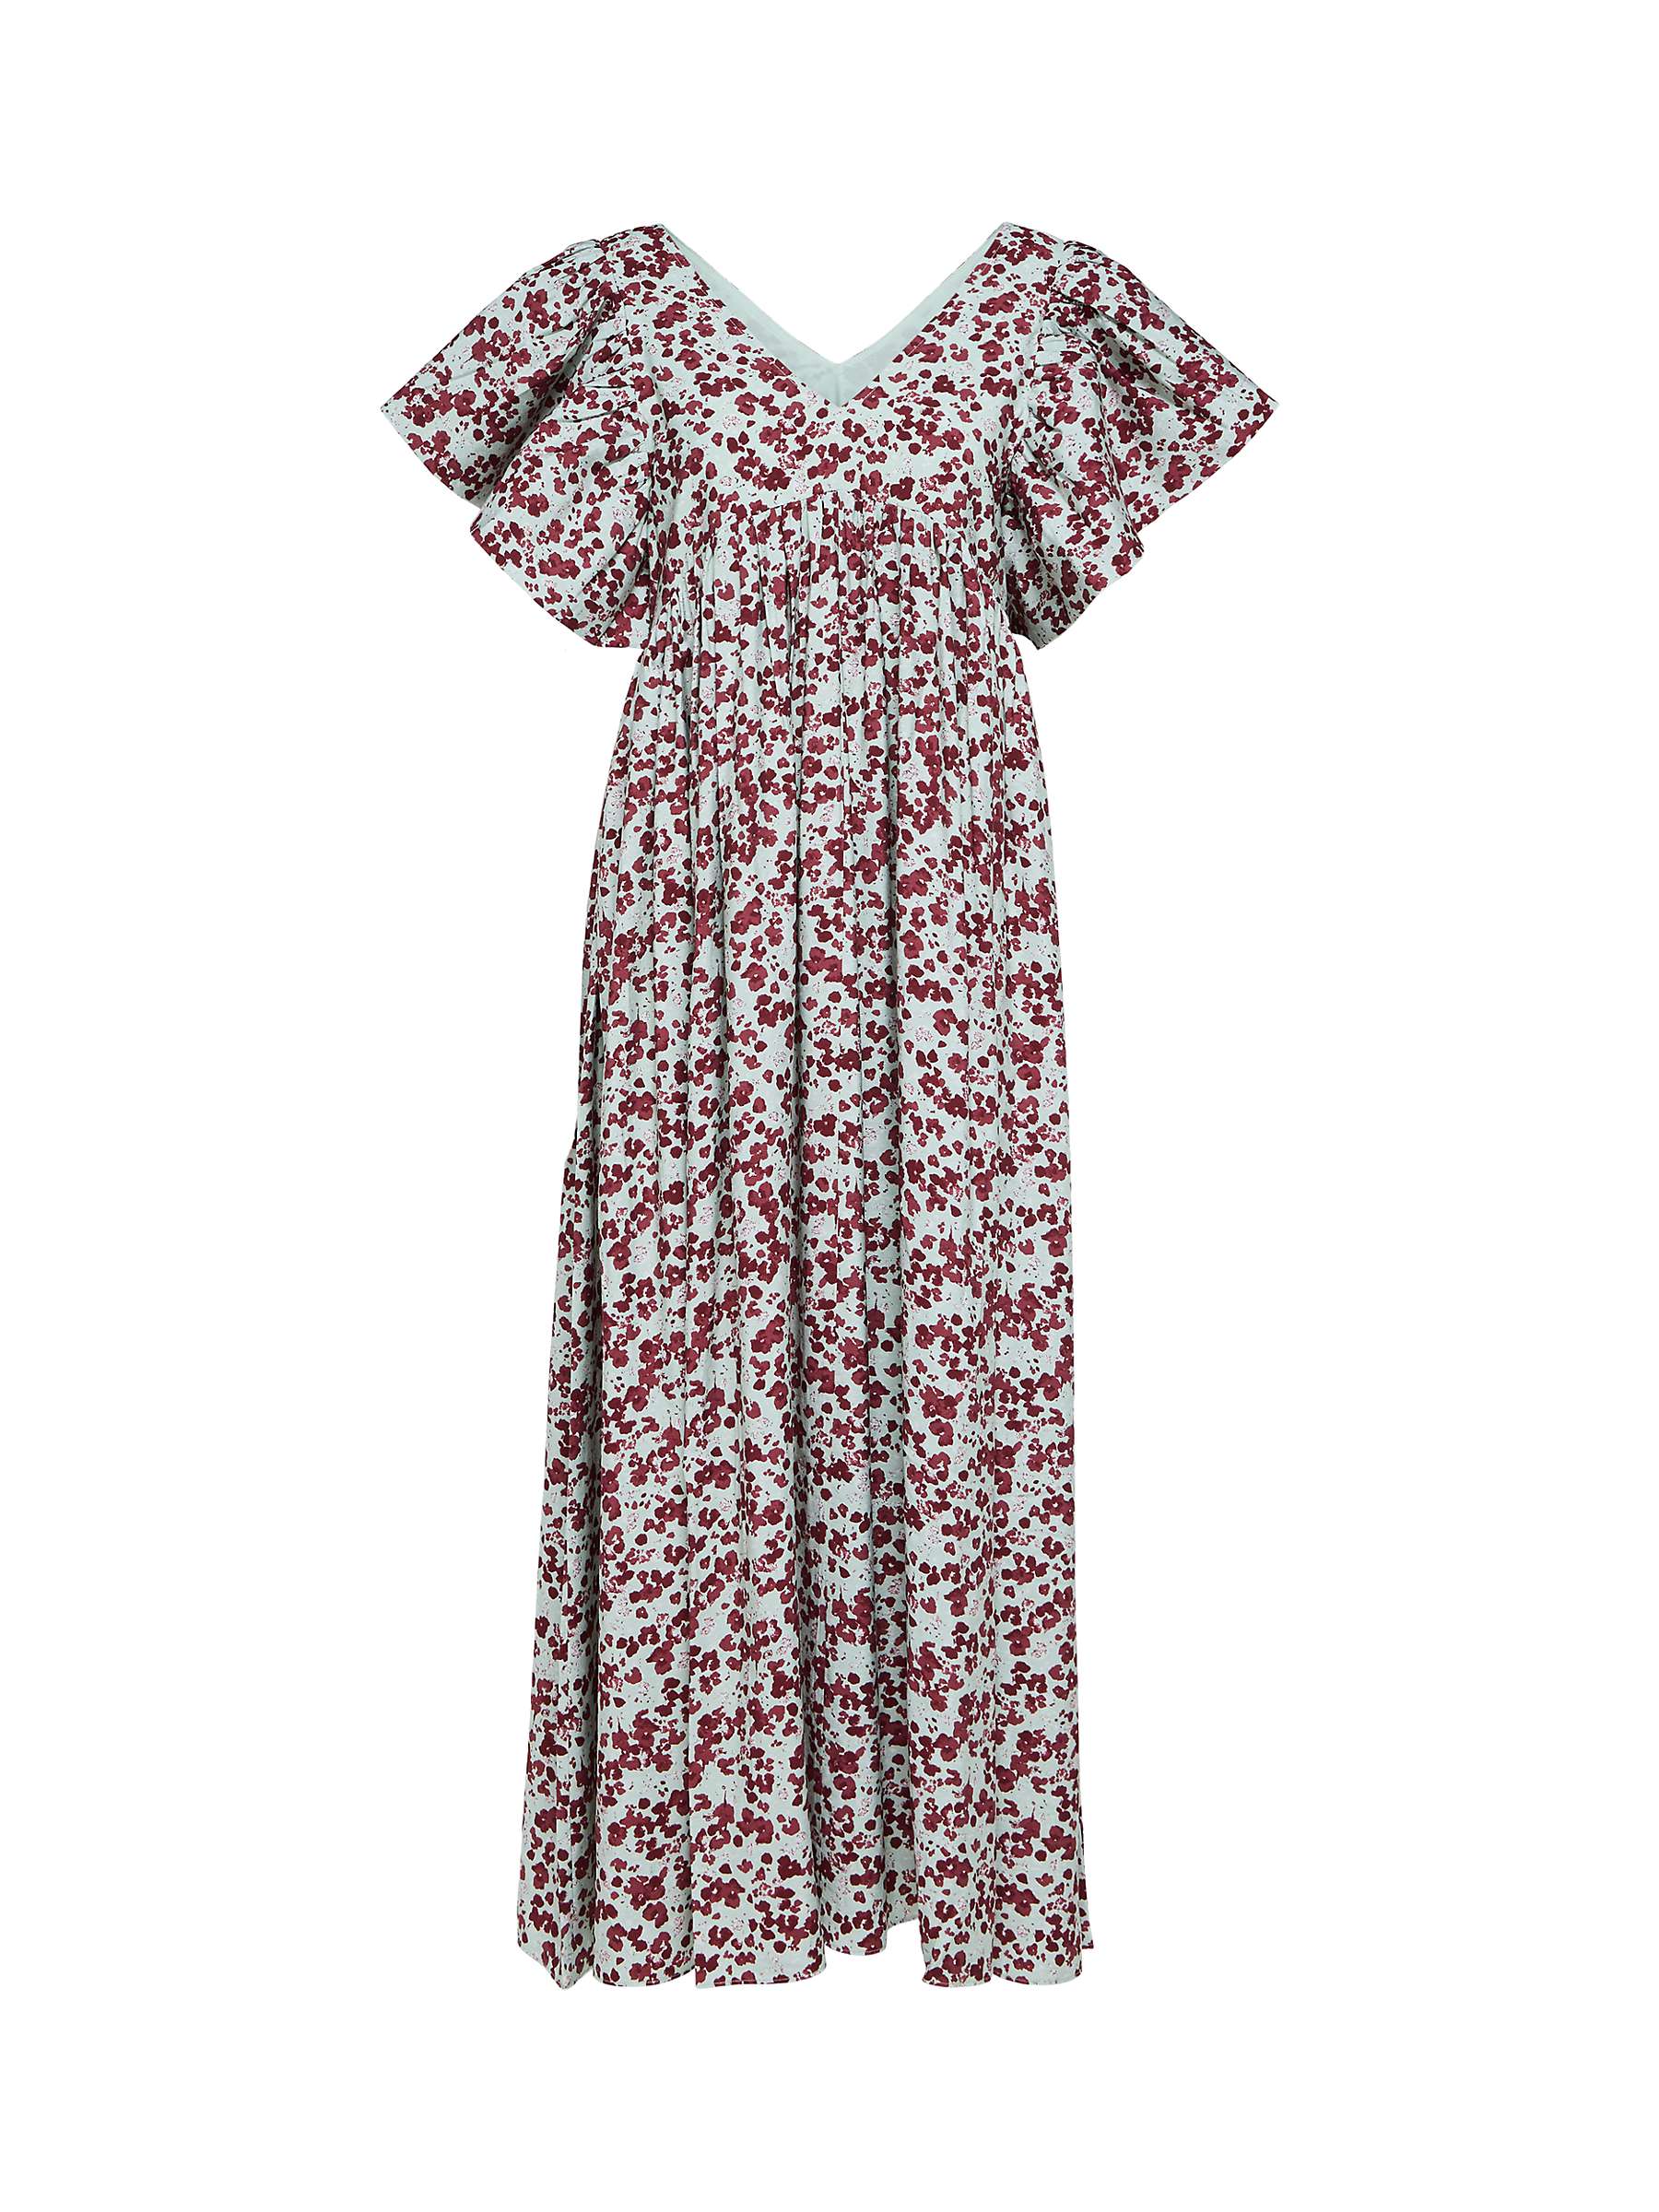 Buy SELECTED FEMME Aqua Foam Floral Maxi Dress, Multi Online at johnlewis.com